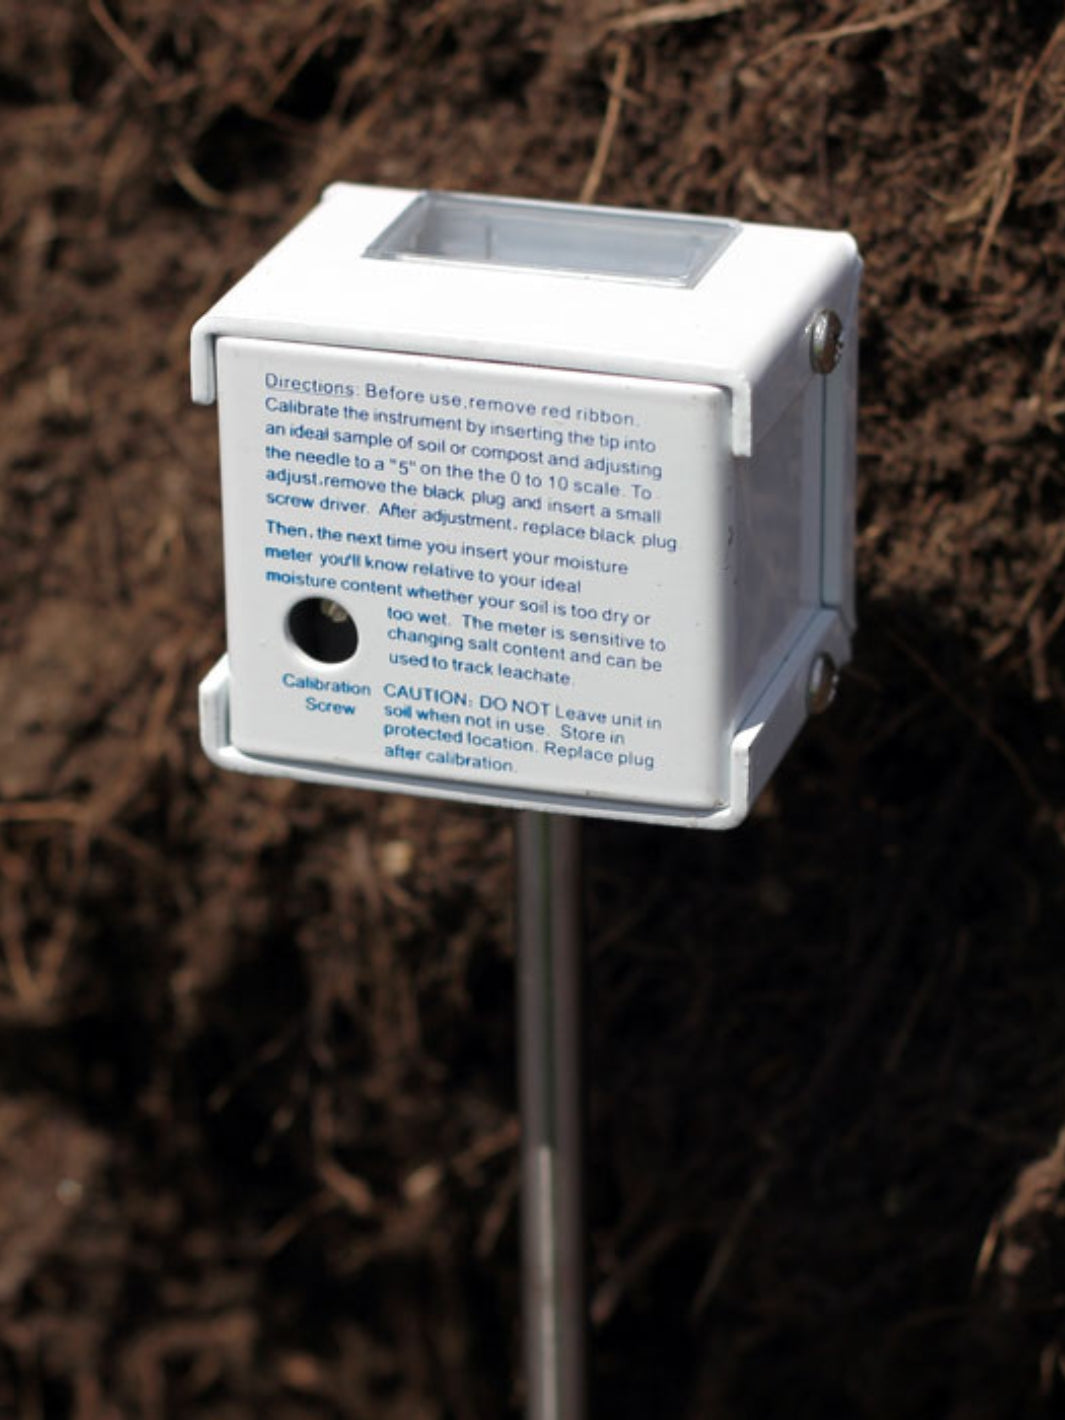 Reotemp Soil Wetness Meter Calibration Instructions